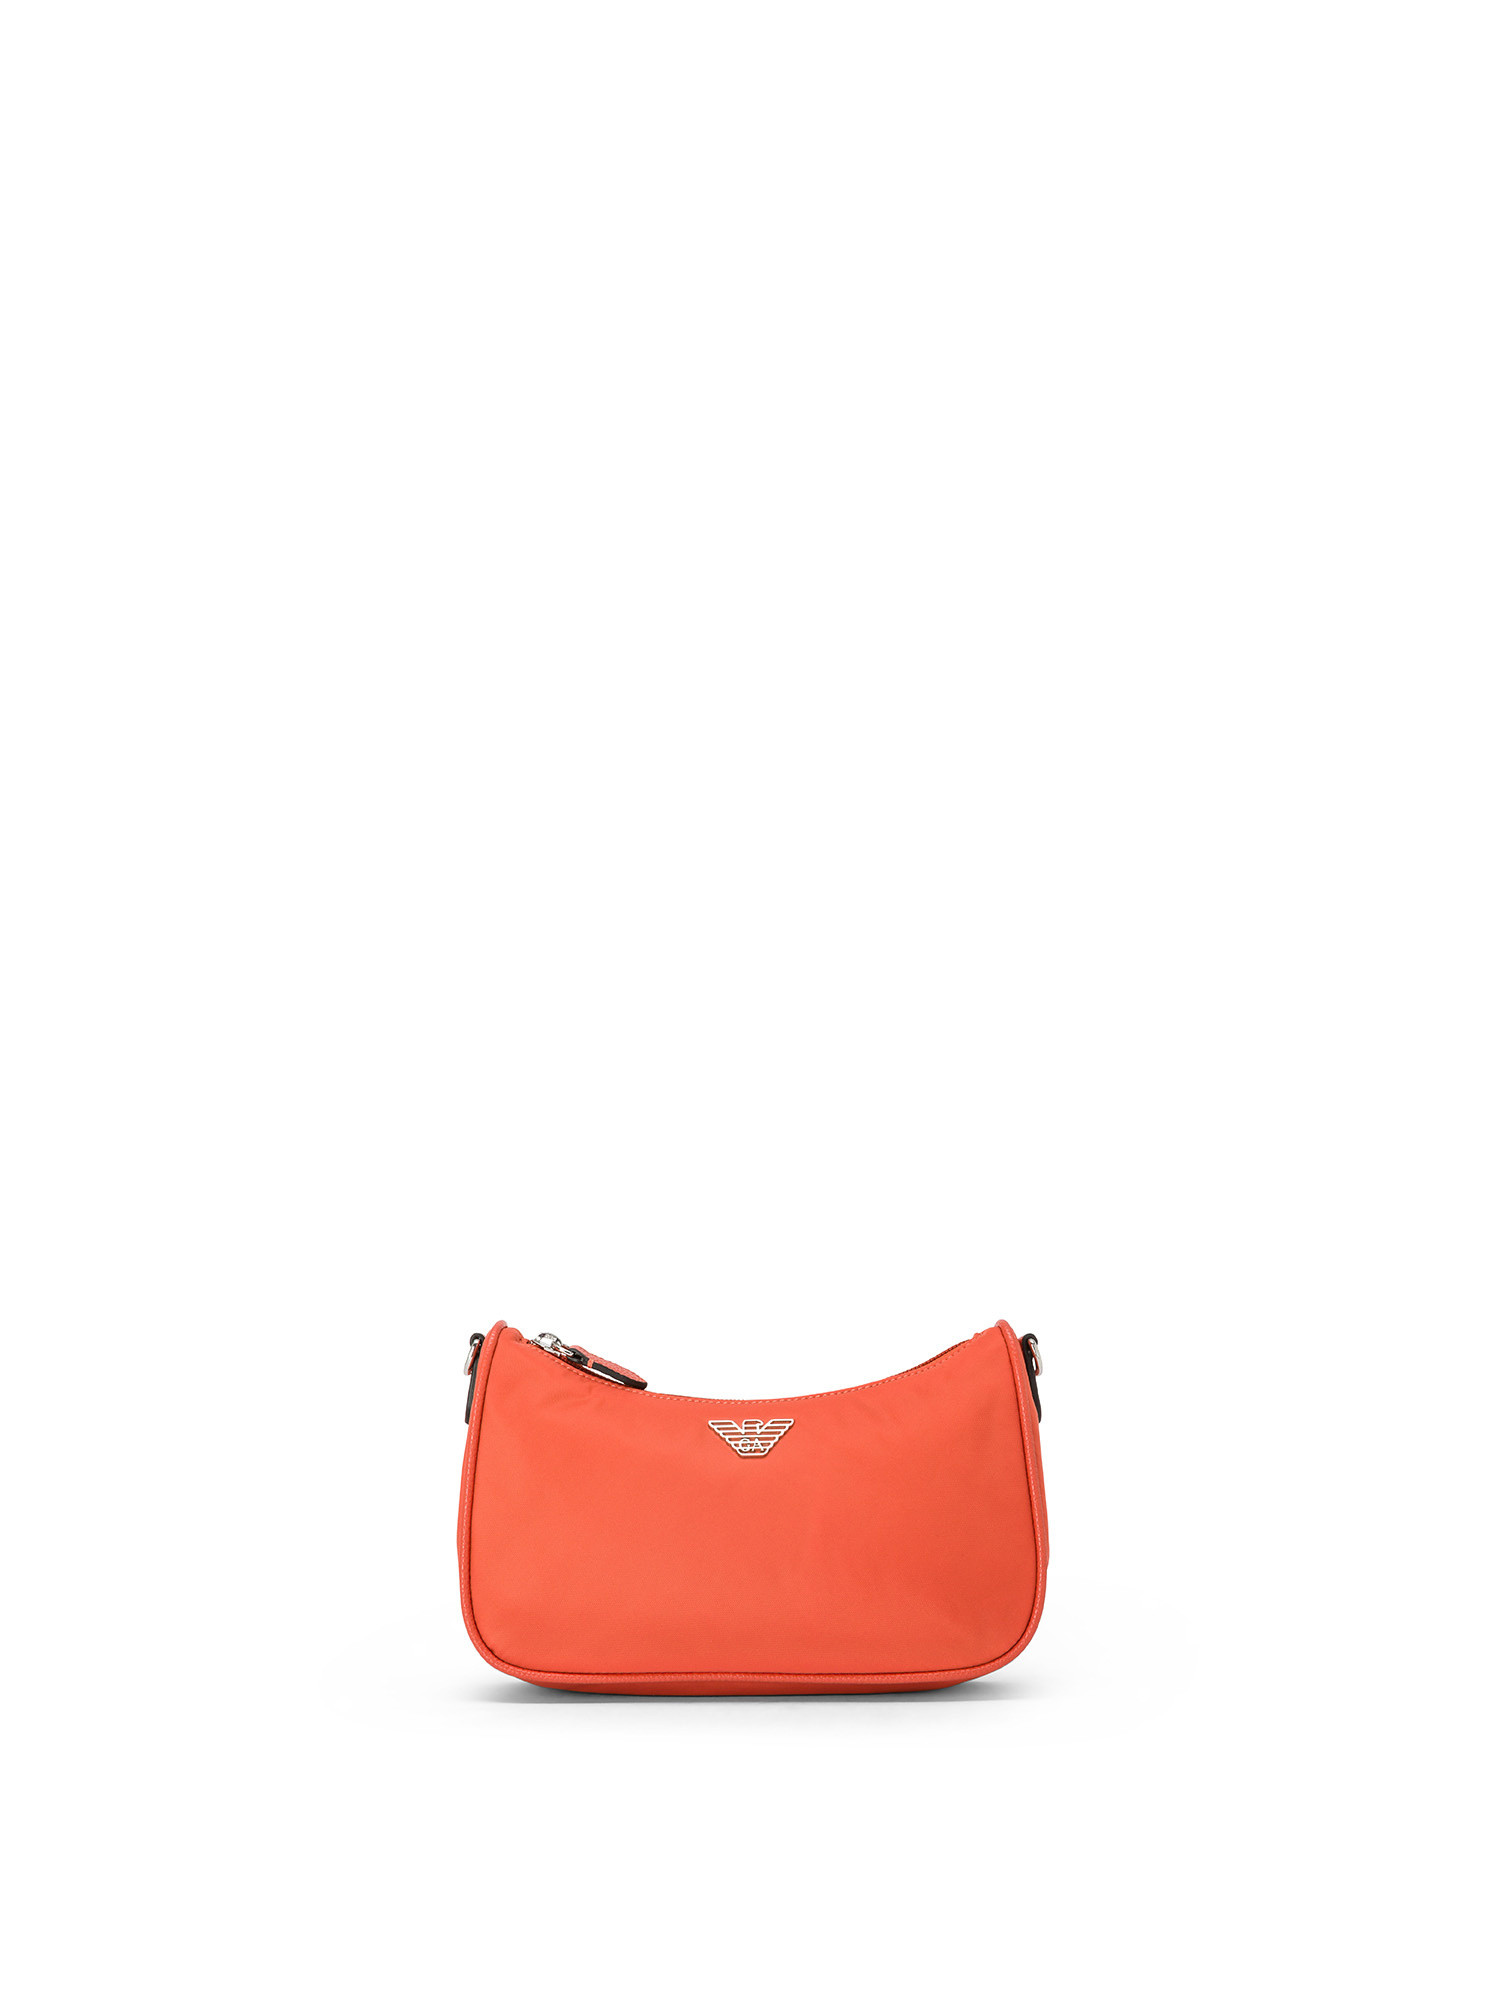 Emporio Armani - Shoulder bag in recycled nylon, Orange, large image number 0